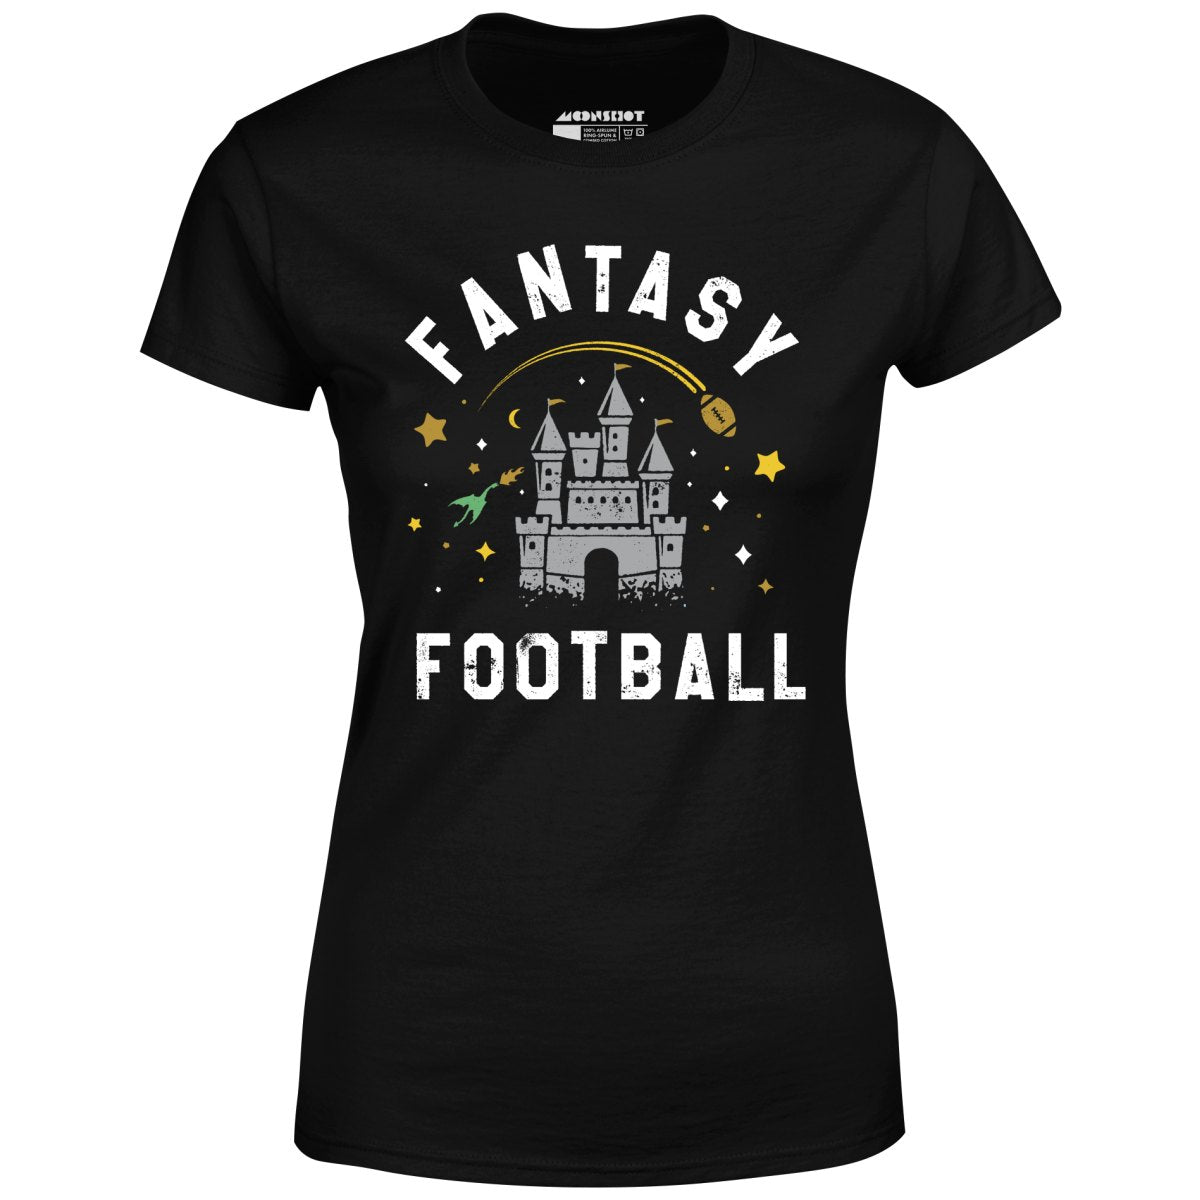 Fantasy Football - Women's T-Shirt